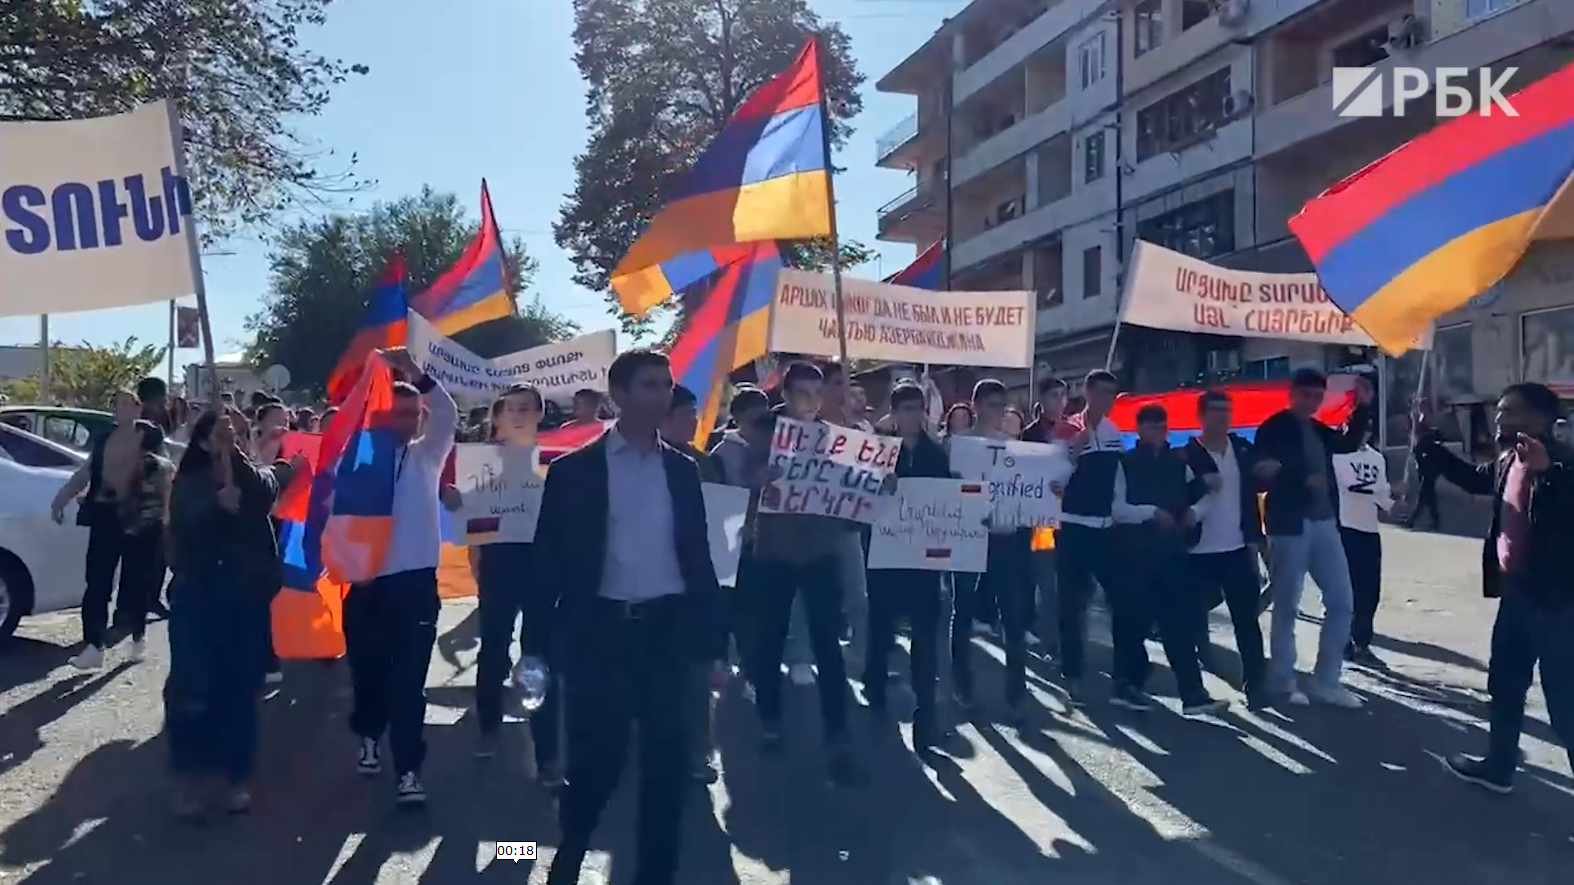 В Степанакерте прошел митинг за независимость Нагорного Карабаха